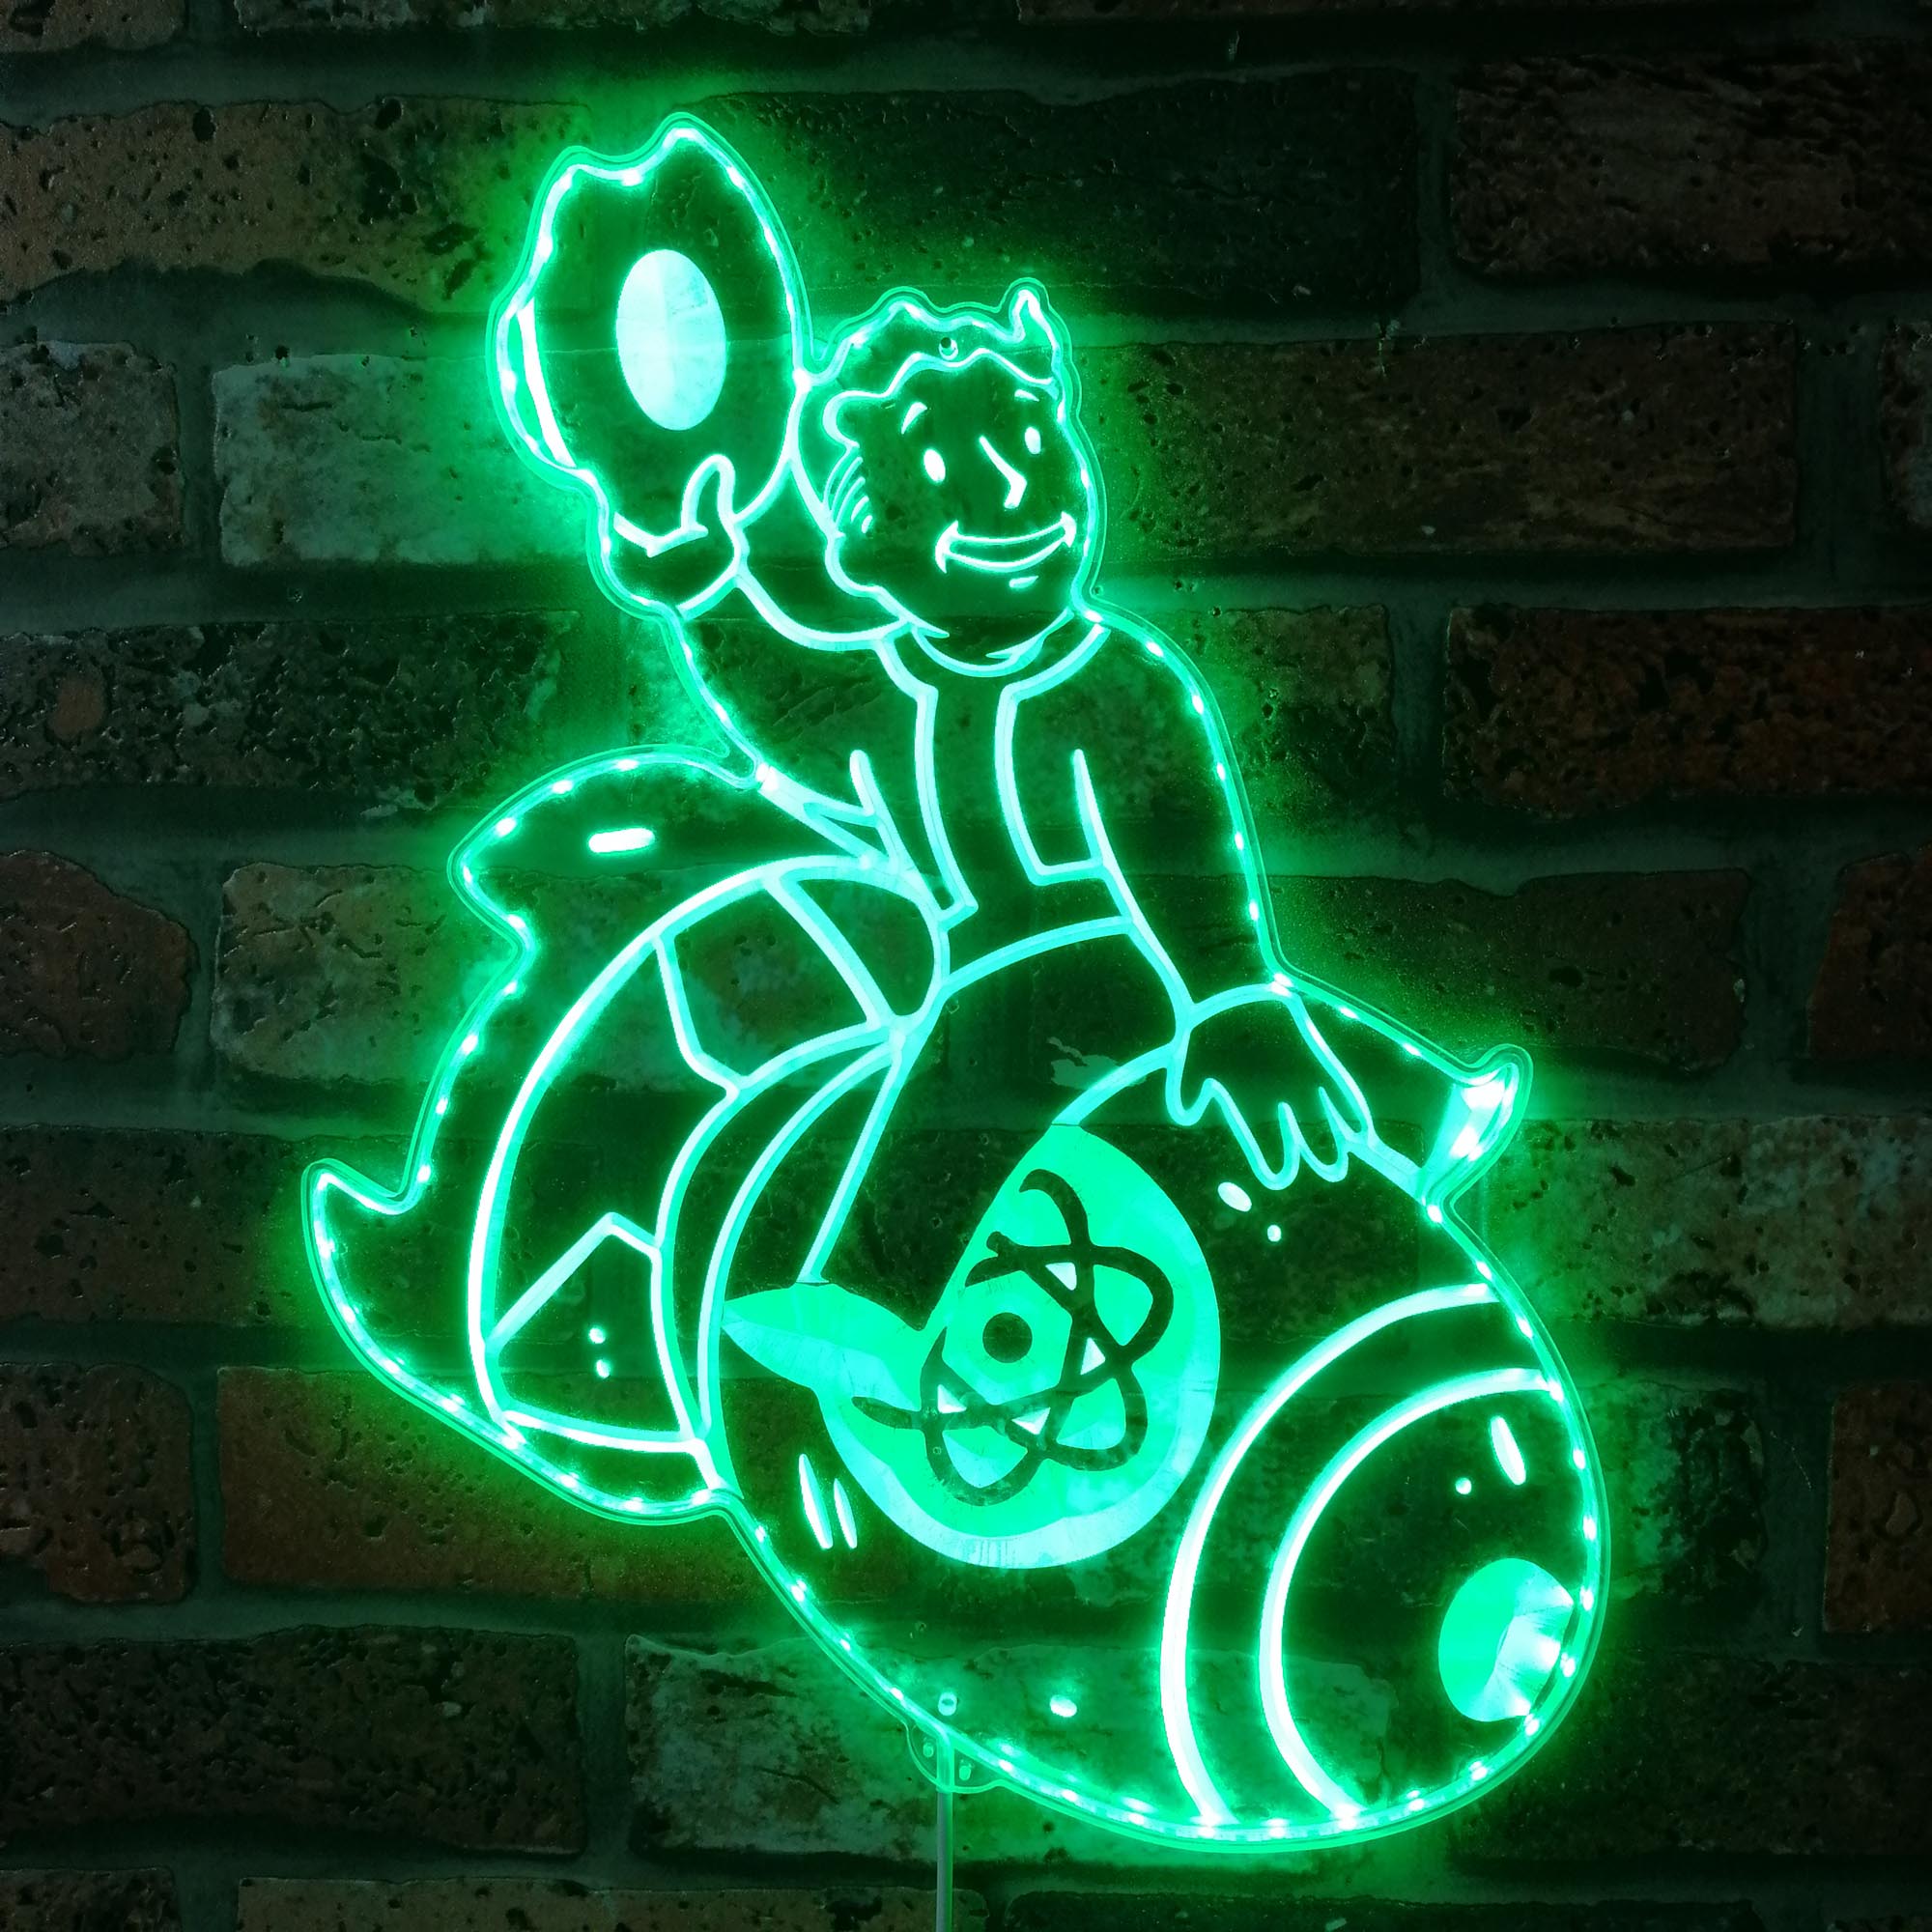 Vault Boy Nuclear Bomb Dynamic RGB Edge Lit LED Sign